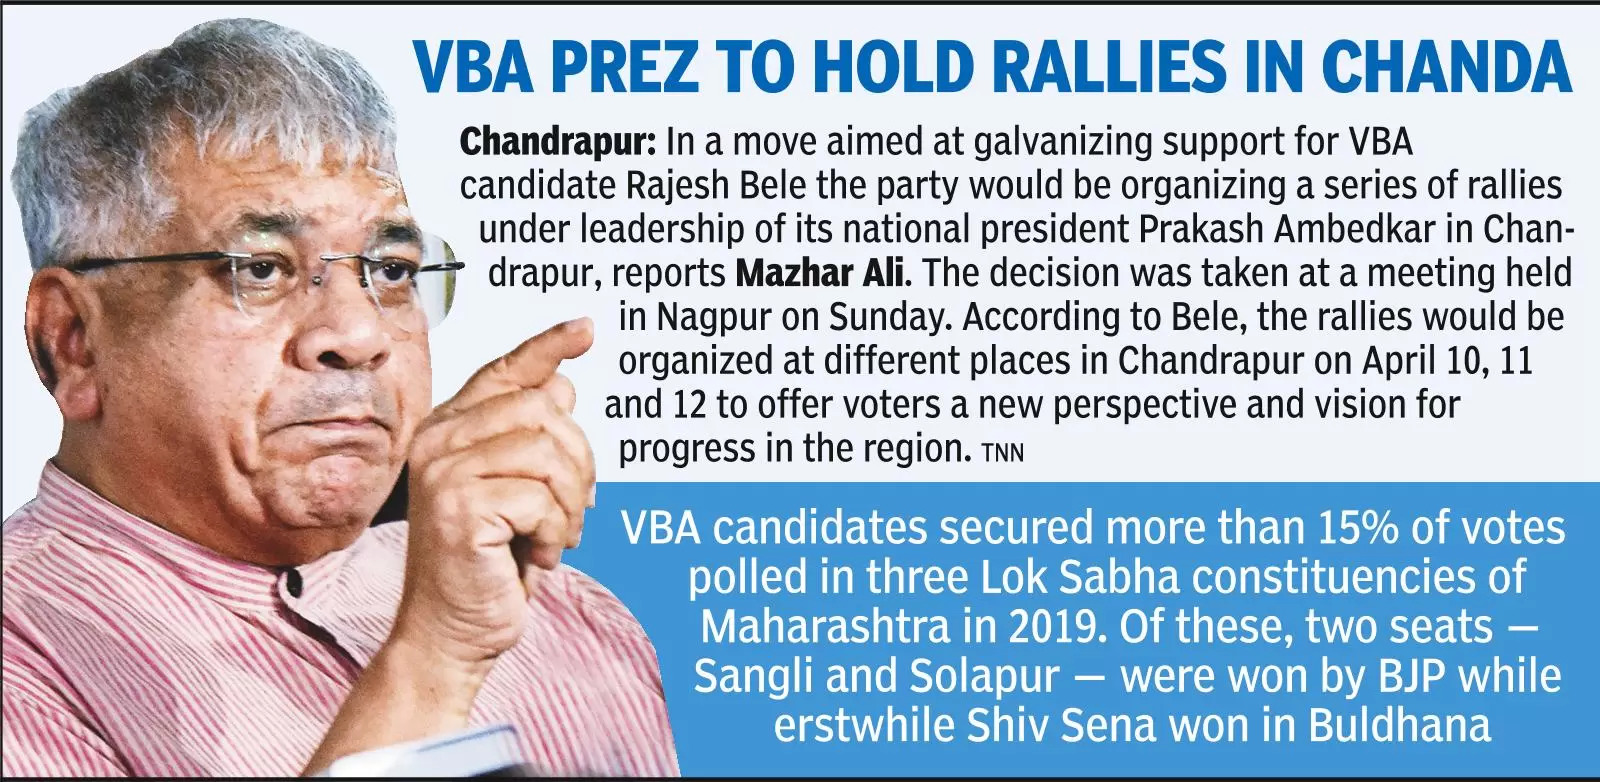 VBA-BJP Face-Off In Four Vidarbha Seats, Ambedkar Throws Gauntlet